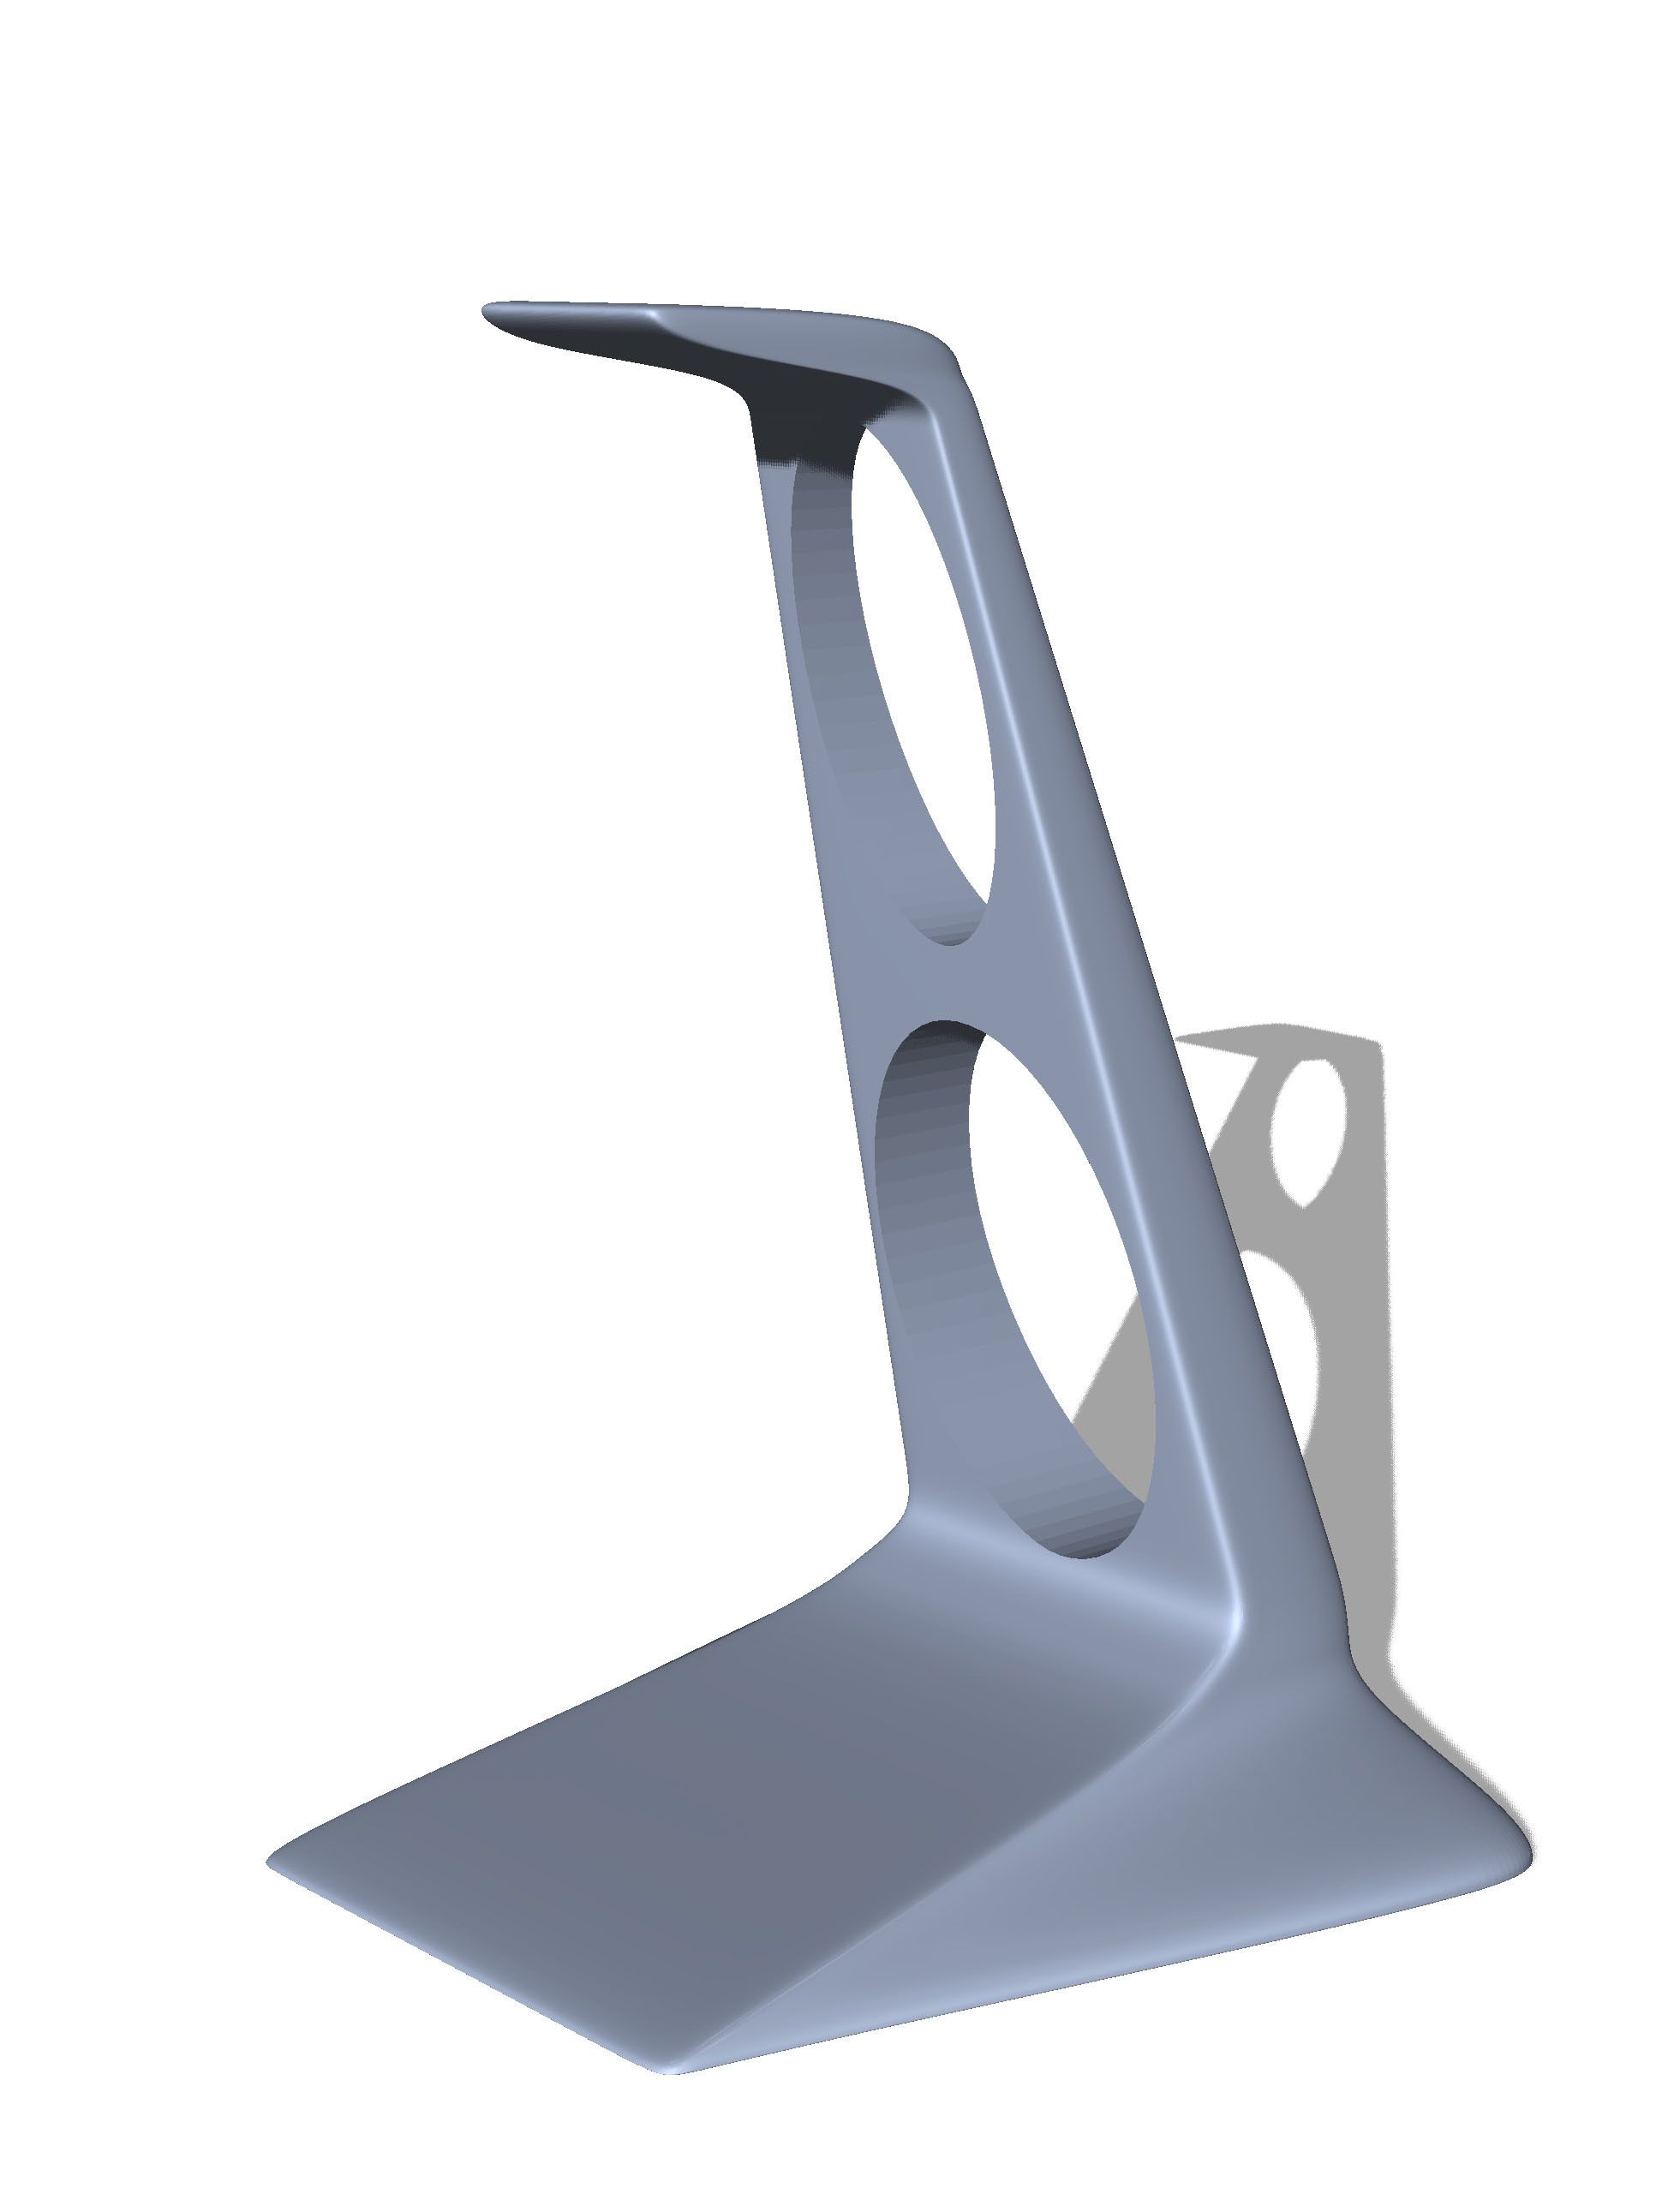 SupportCasque.jpg Download STL file Headphone holder • 3D printing design, Creathur